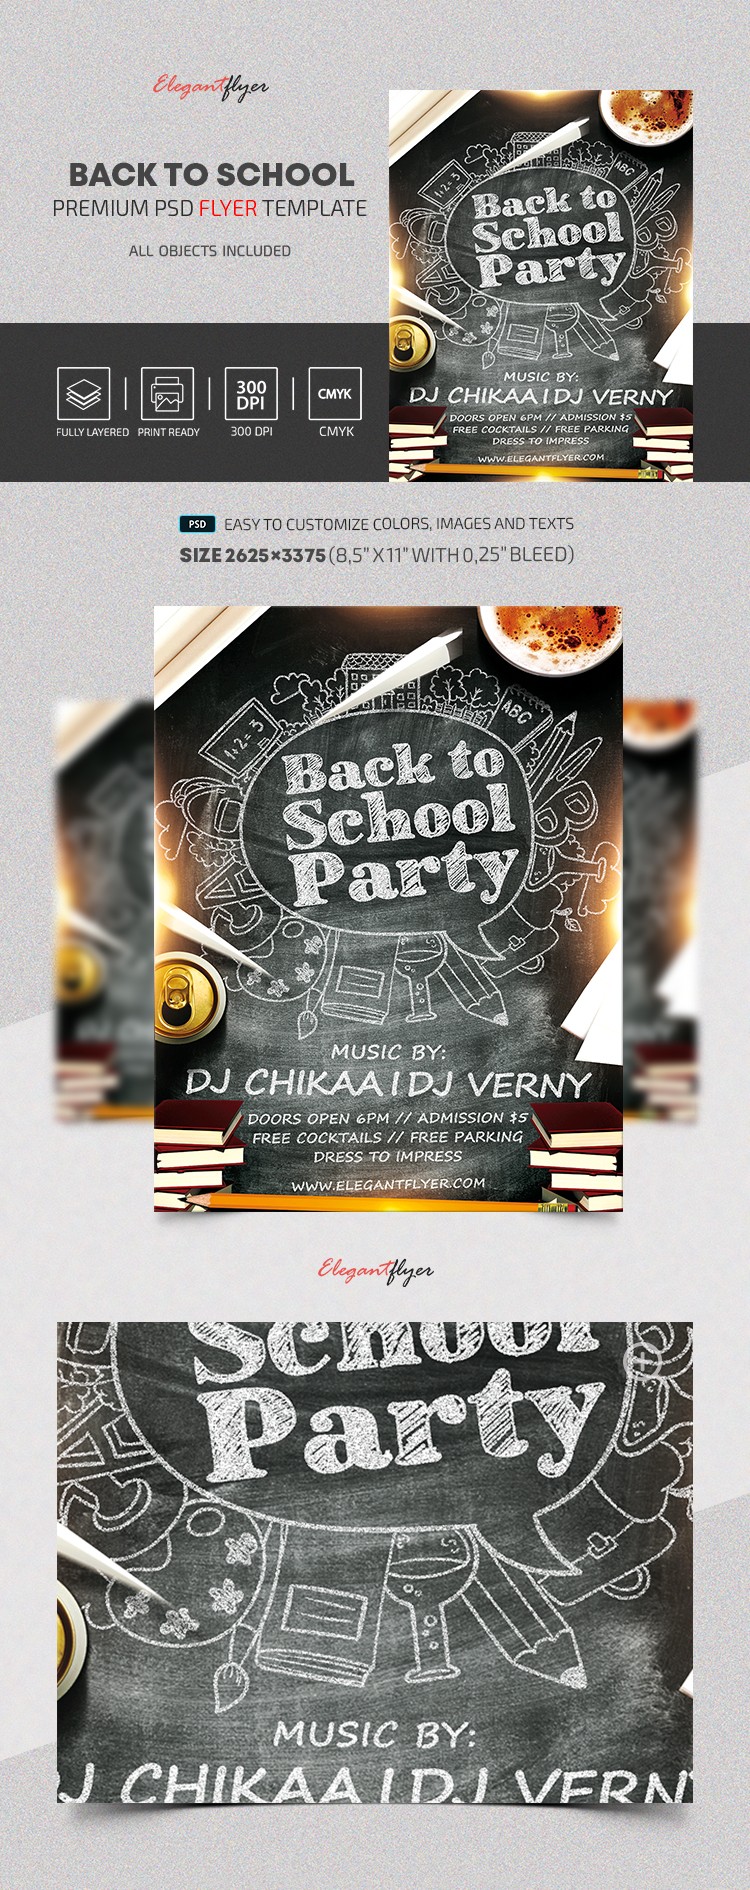 Back to School Party by ElegantFlyer